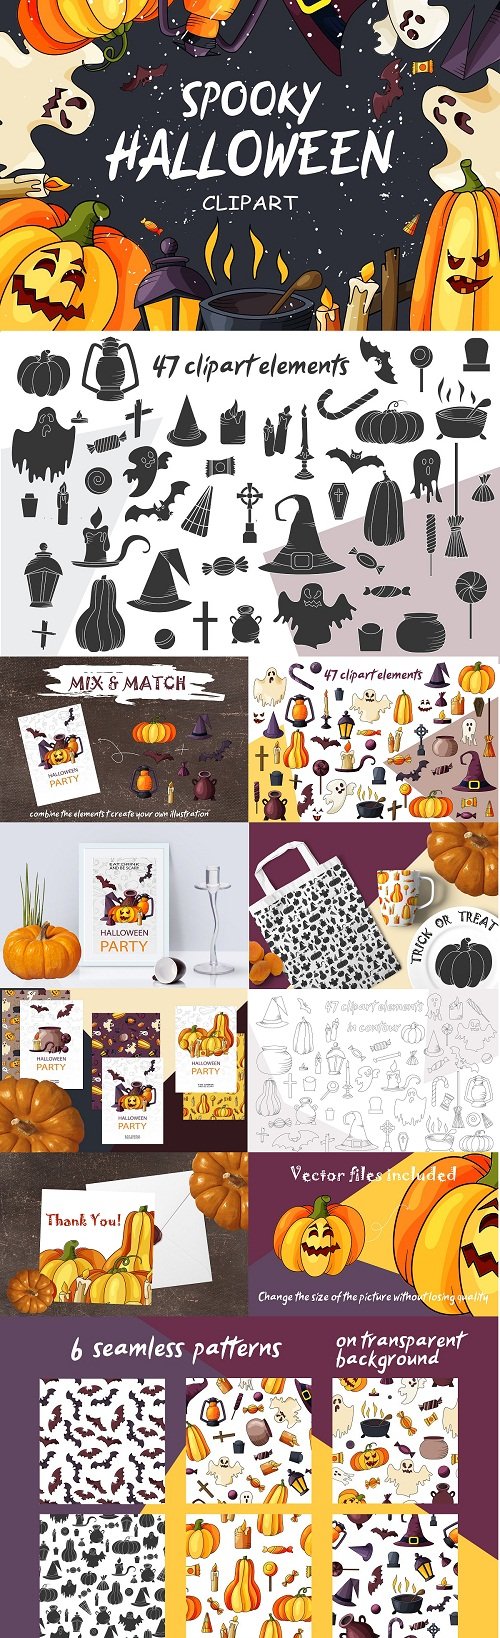 Spooky Halloween Clipart - 1572260